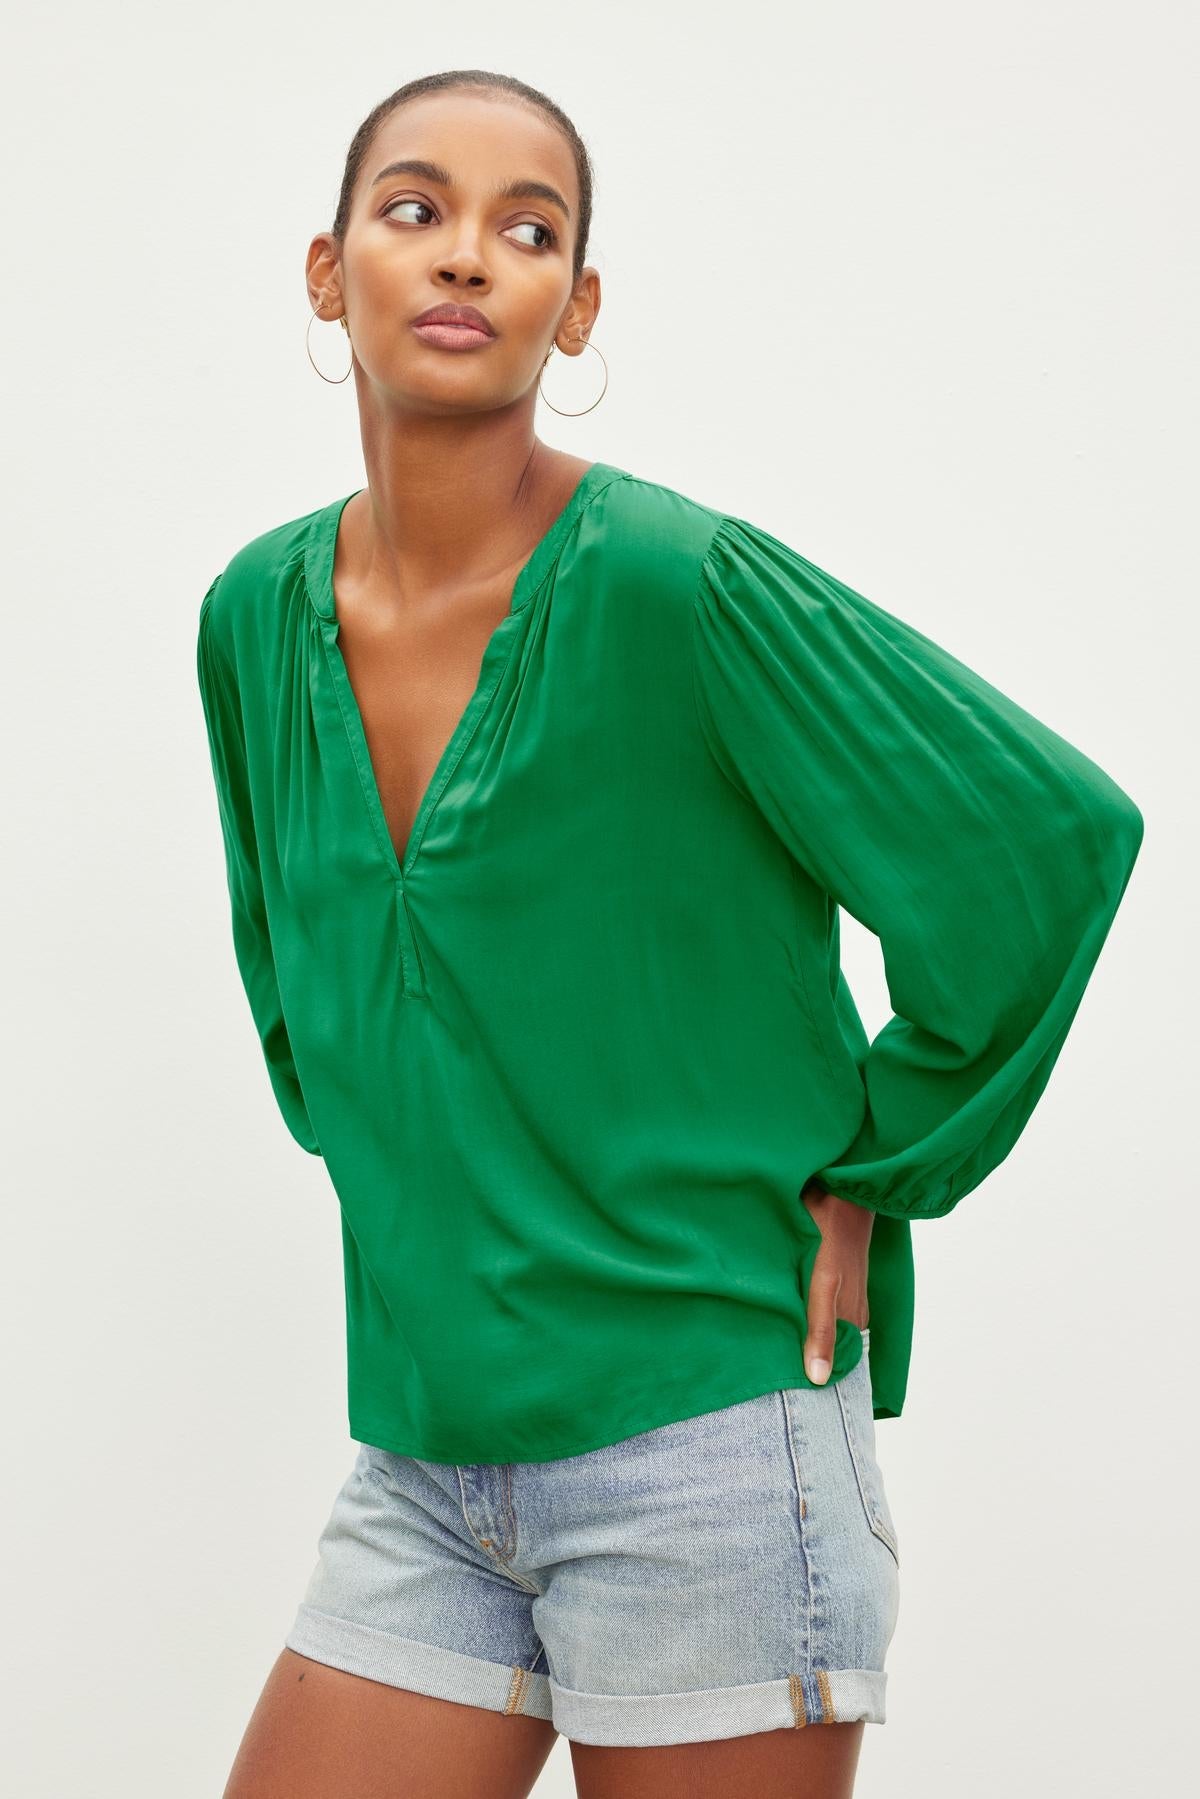 Velvet Ashley Rayon Challis Blouse - Fairway Clothing - Tops - Shirts - Blouses - Blouses Top Price by Velvet | Grace the Boutique